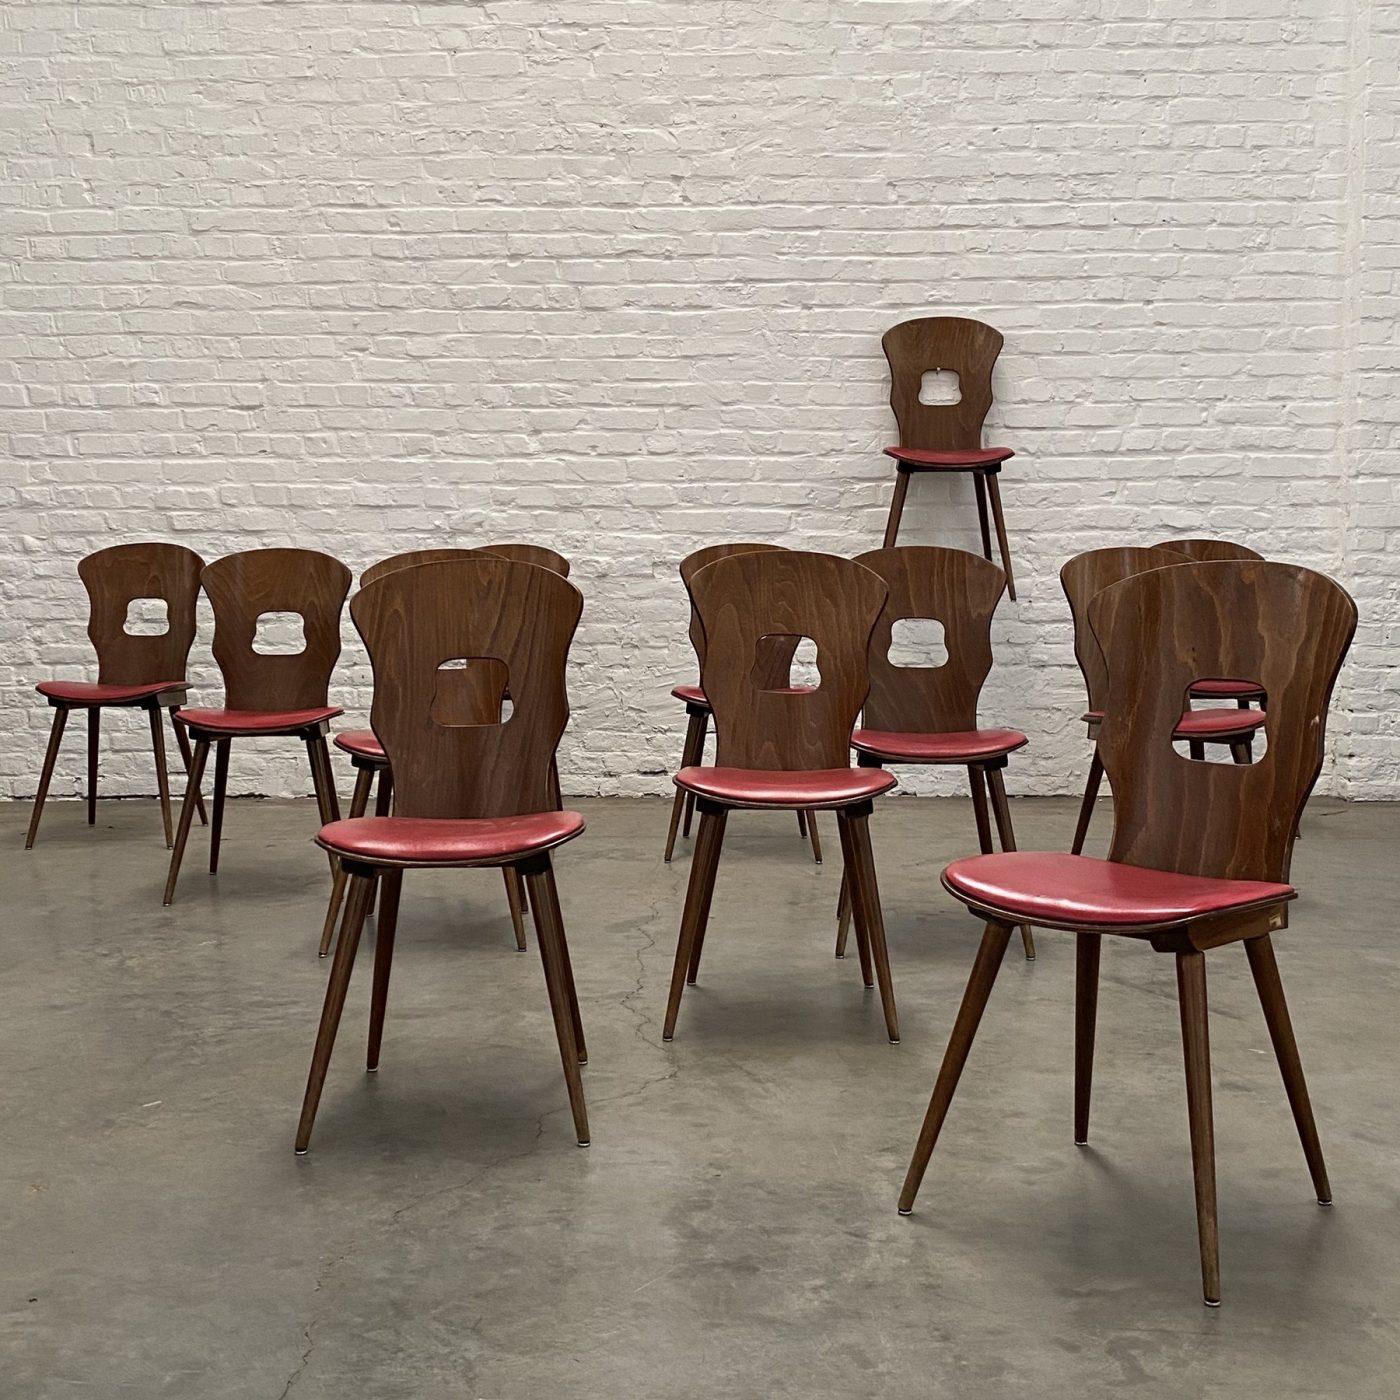 objet-vagabond-baumann-chairs0003